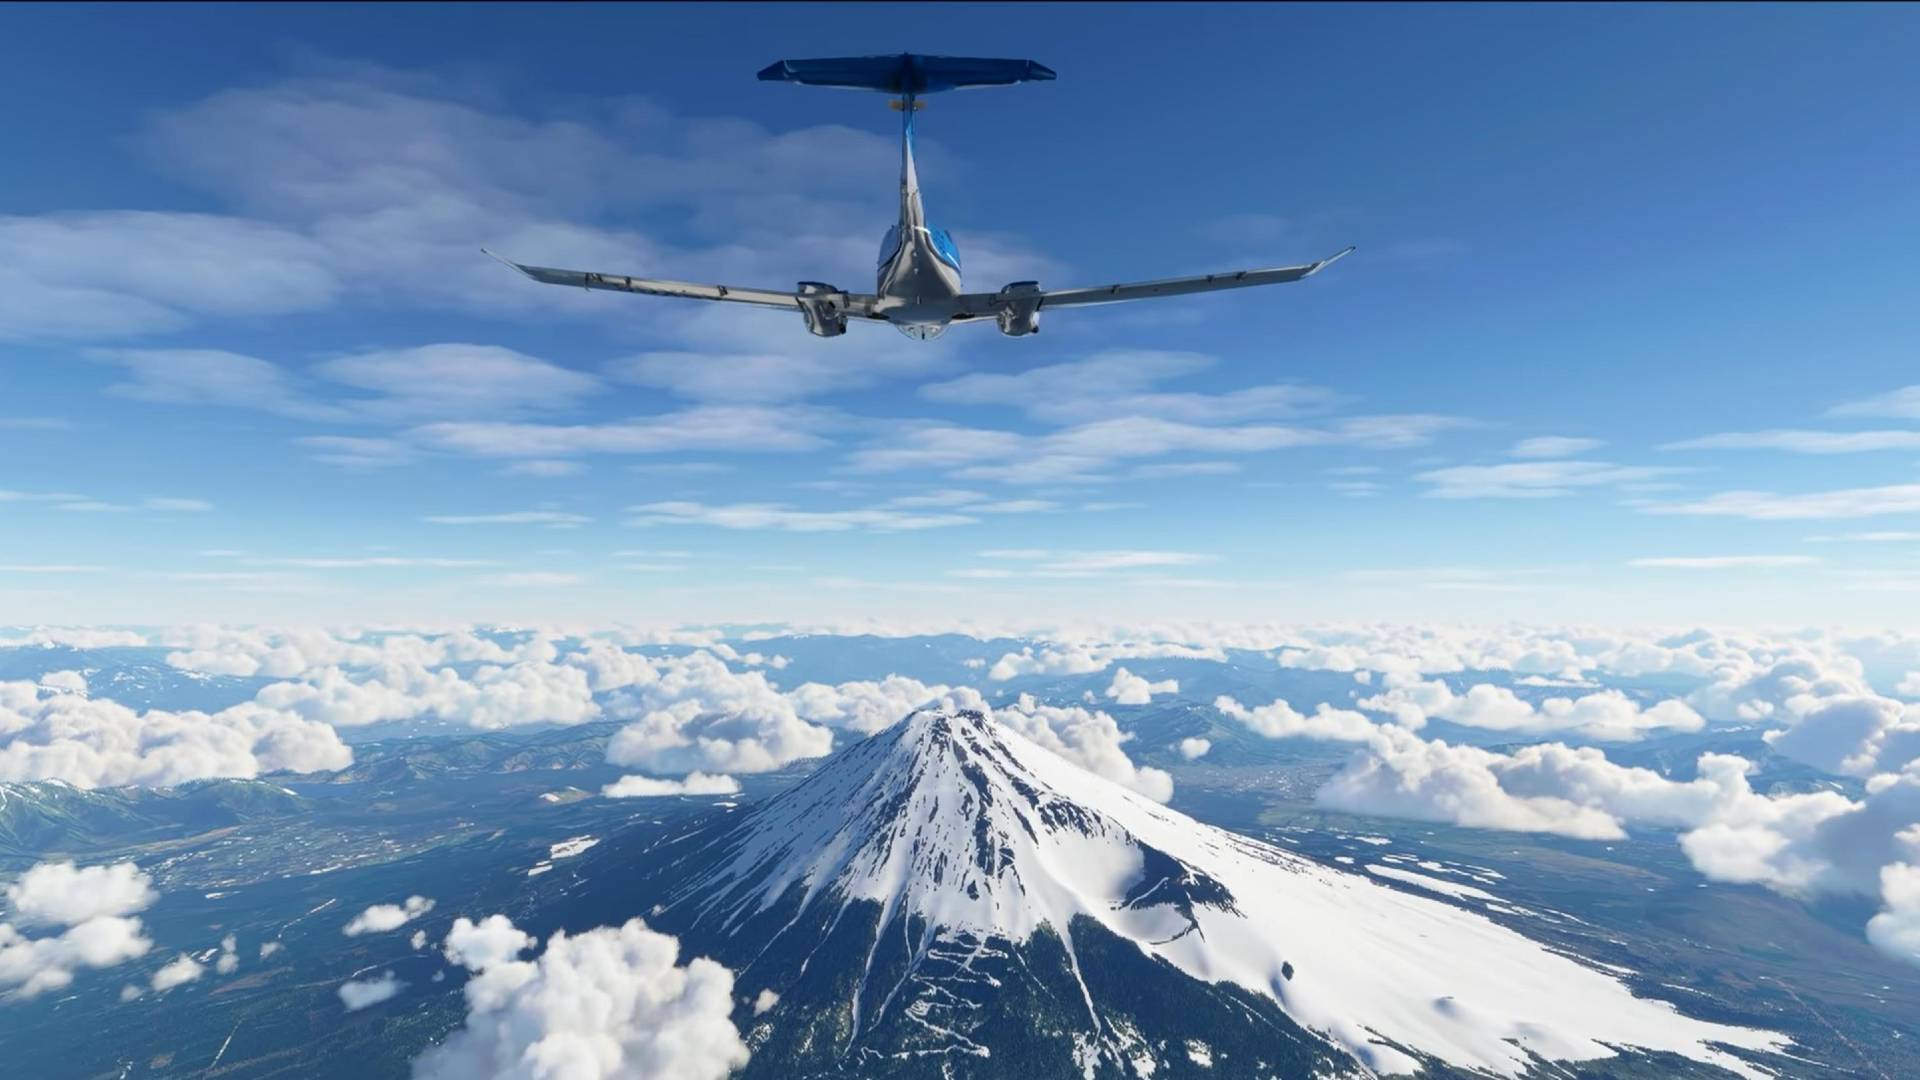 Microsoft Flight Simulator Xbox release date: July 27, 2021